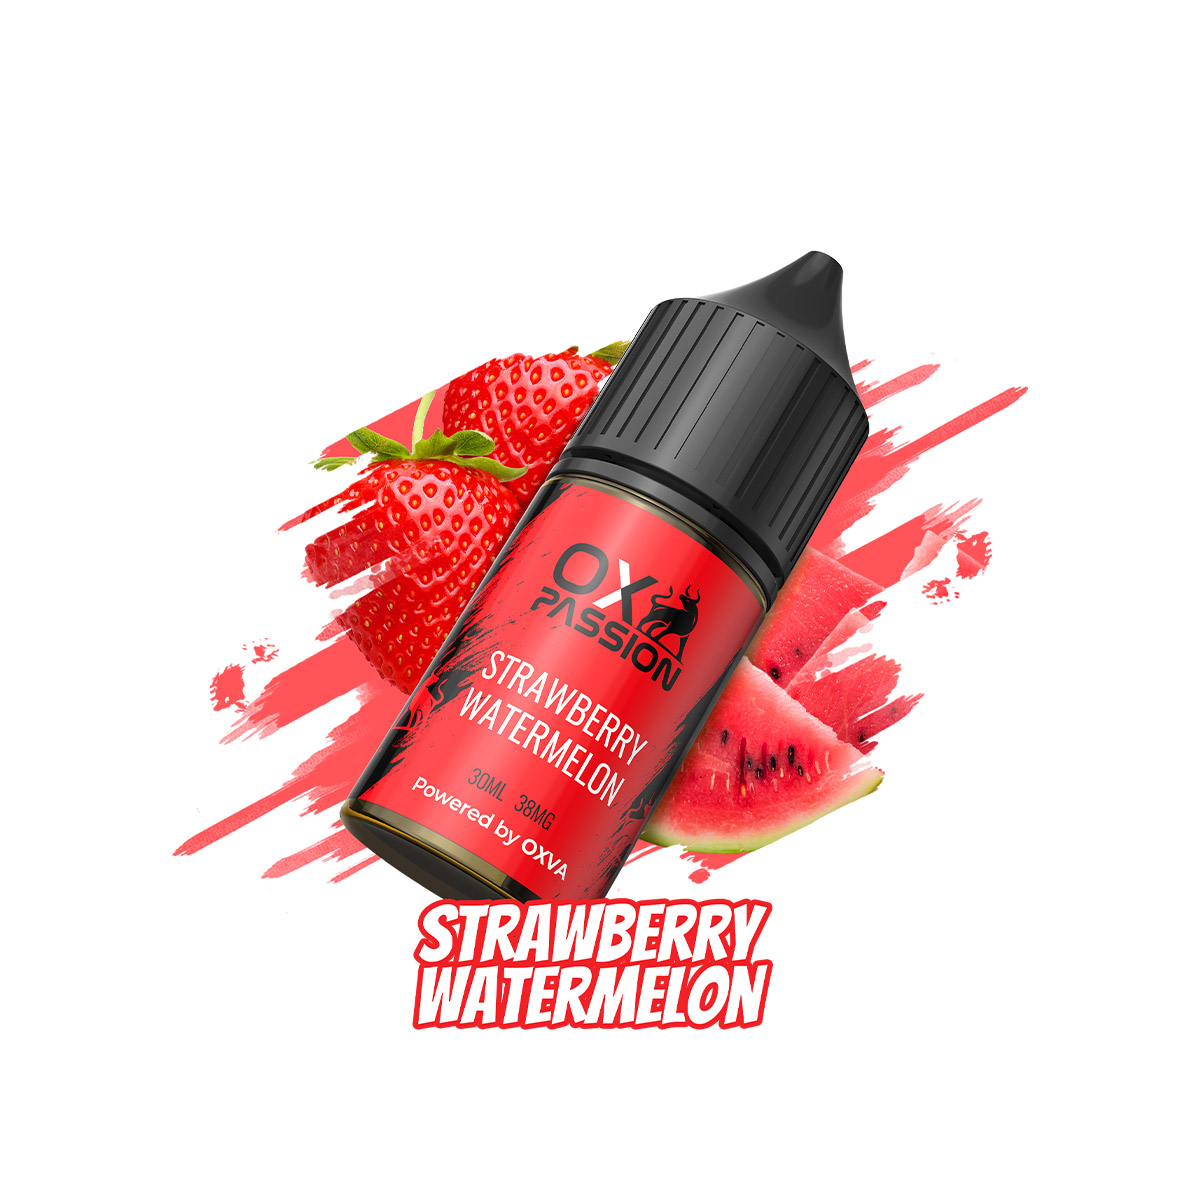 Oxva Passion - Strawberry Watermelon ( Dâu dưa hấu )